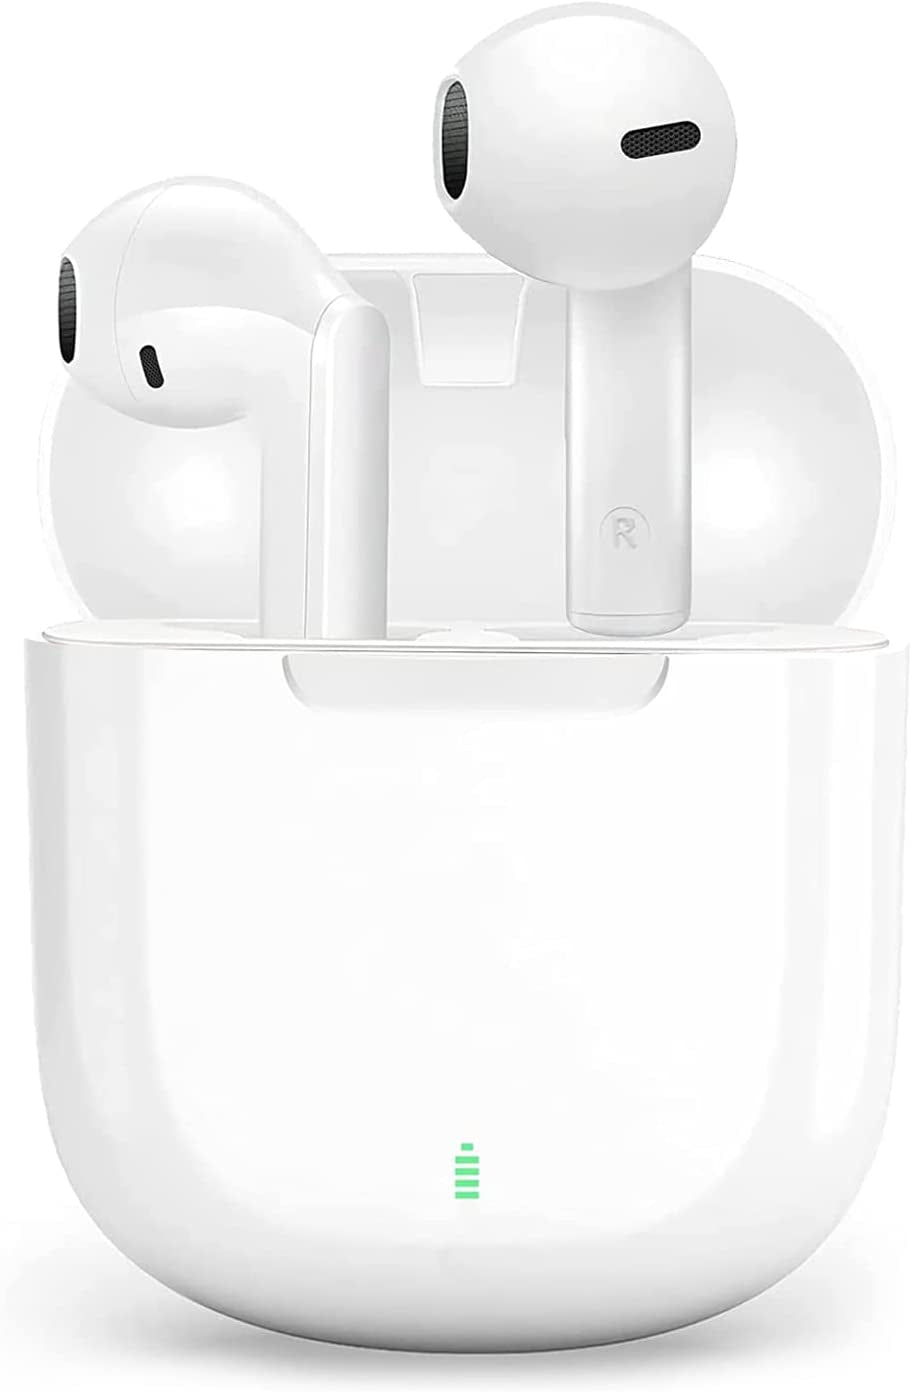 Wireless Earbuds, Bluetooth 5.0 Earbuds, Earphones Wireless Bluetooth with Charging Case, Ear Bud & In-Ear Headphones IPX6 Waterproof, Wireless Ear Buds with Mic Auto Pairing